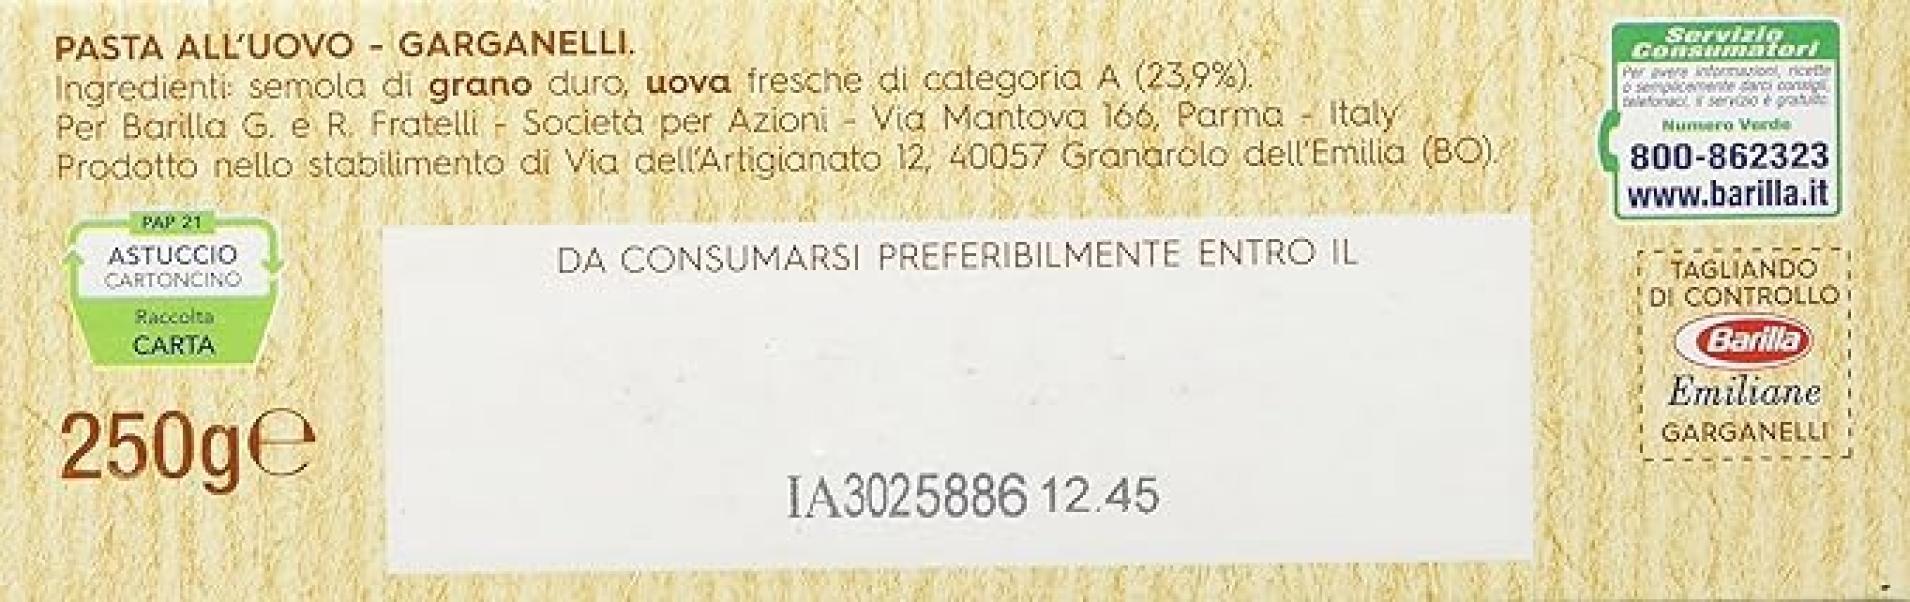 pasta-emiliane-garganelli-barilla-250gr-4